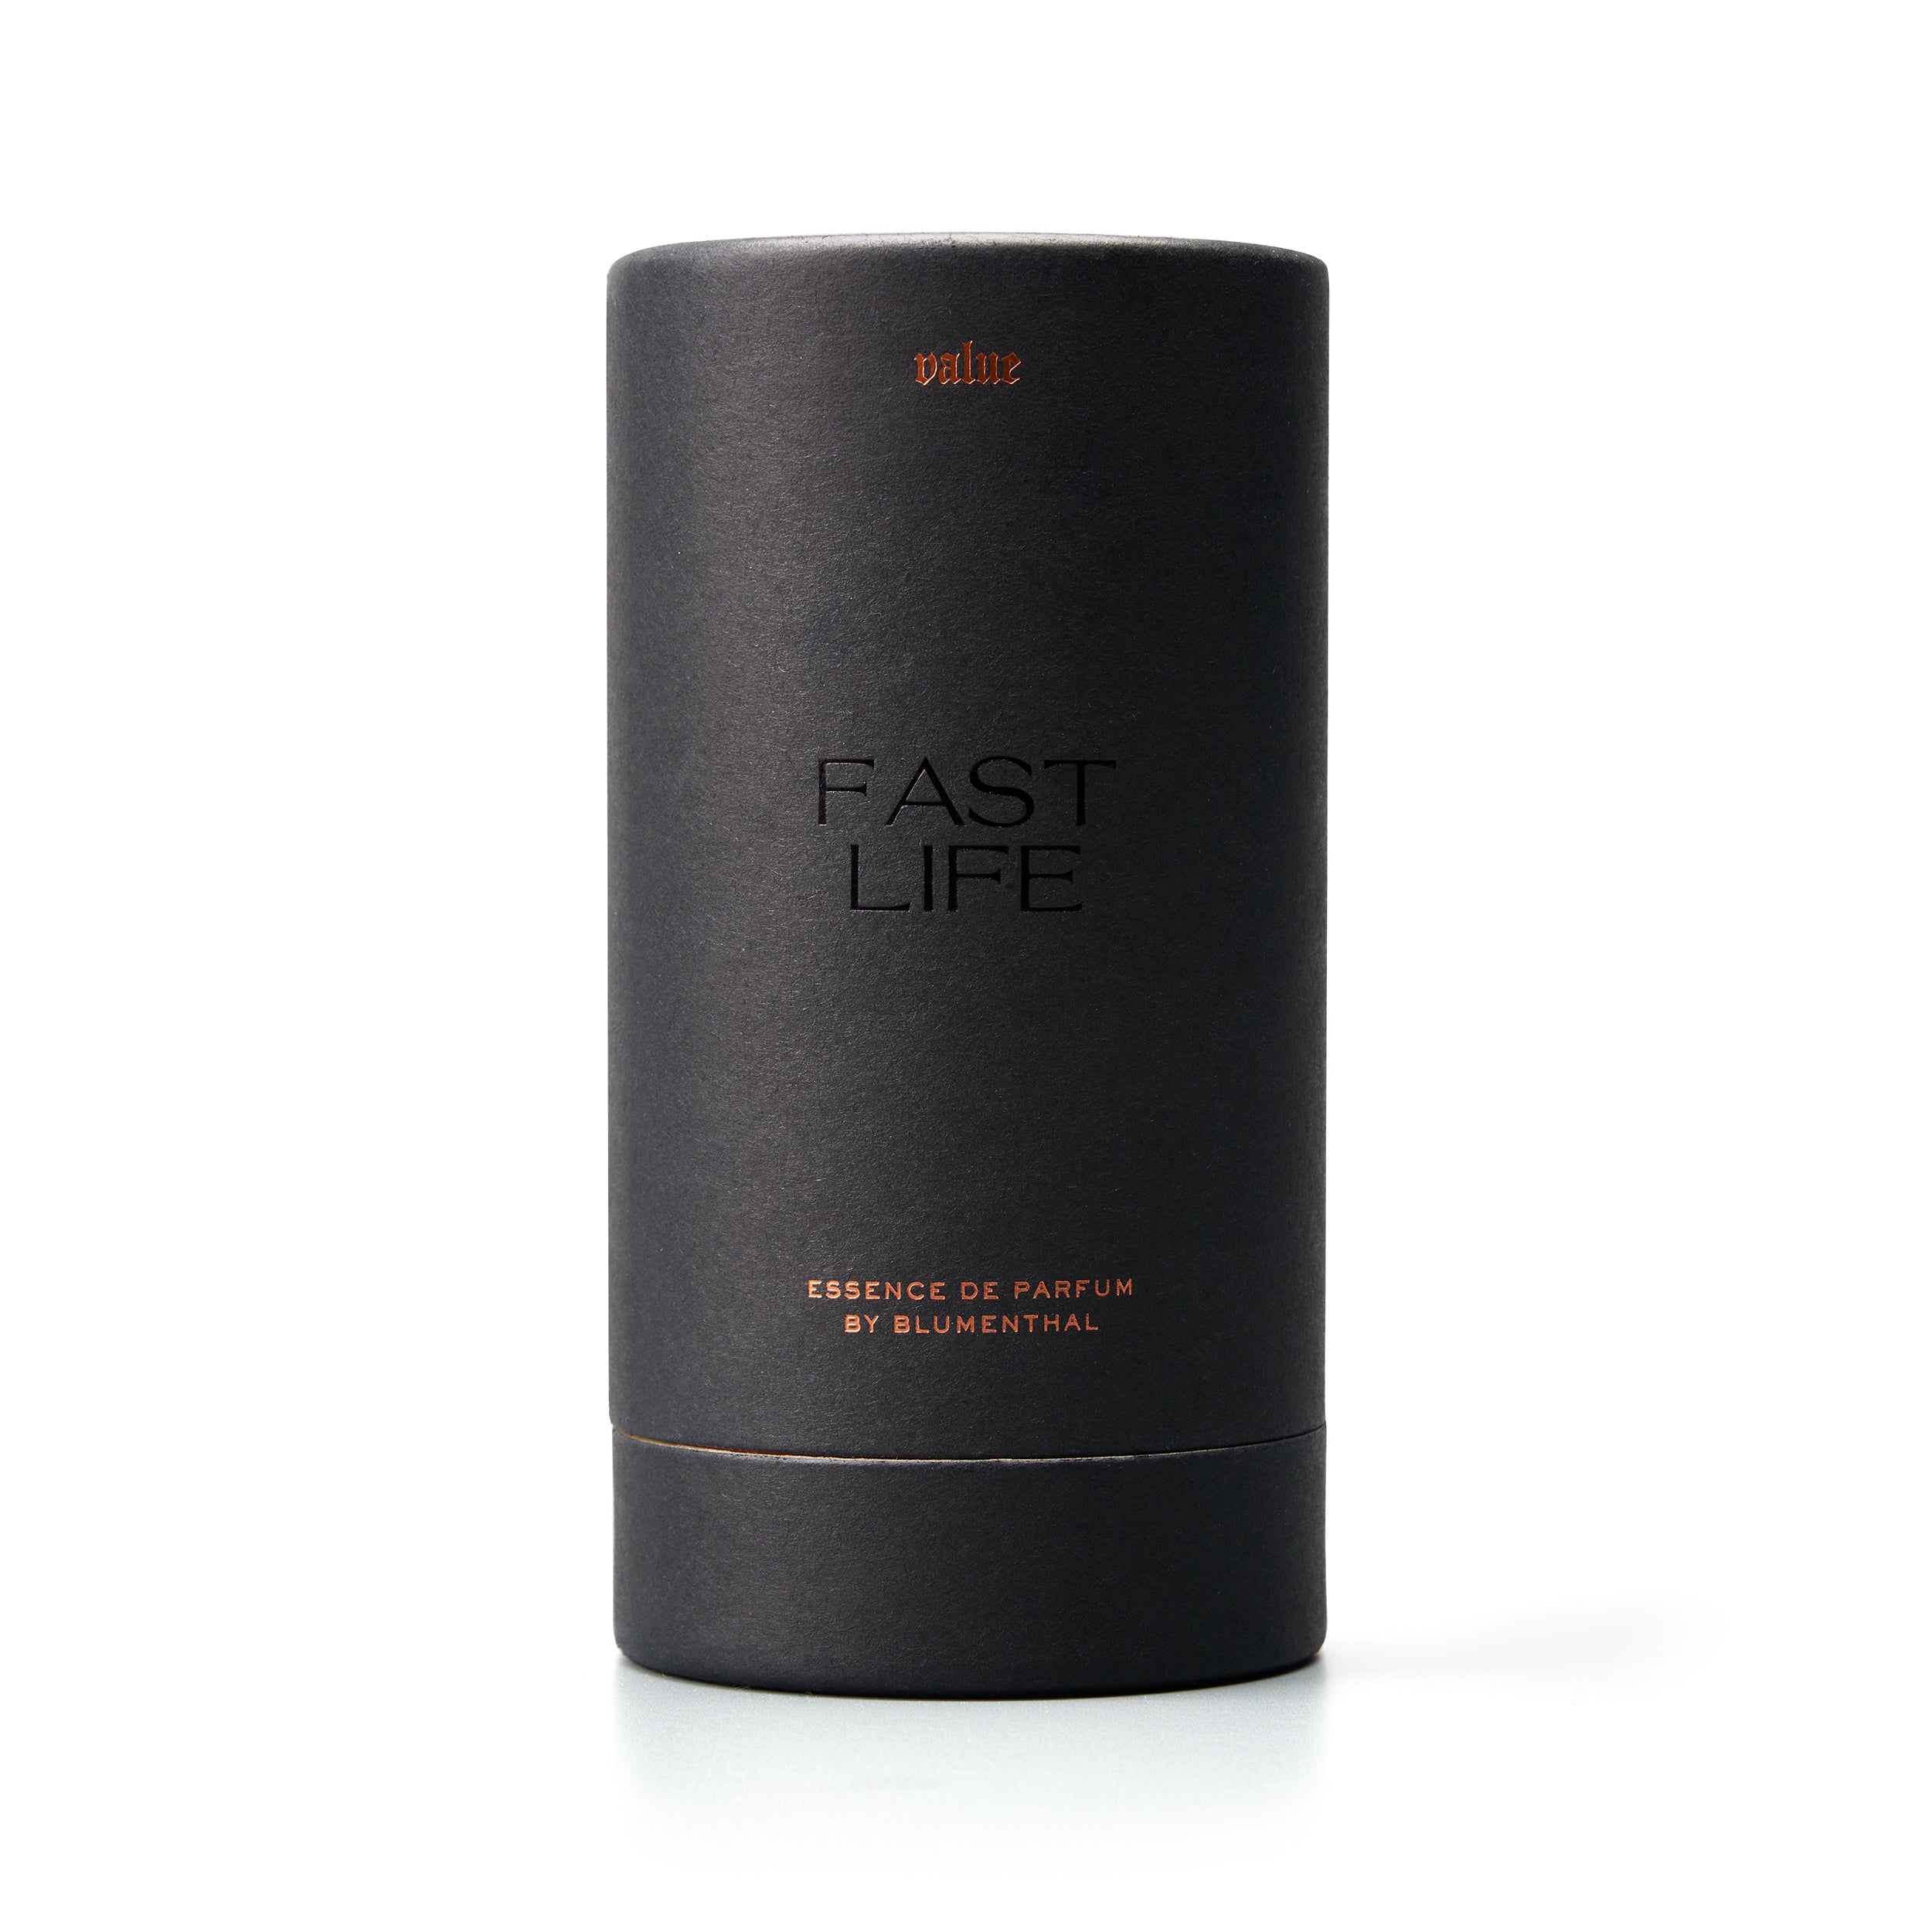 "Fast Life" Essence de Parfum